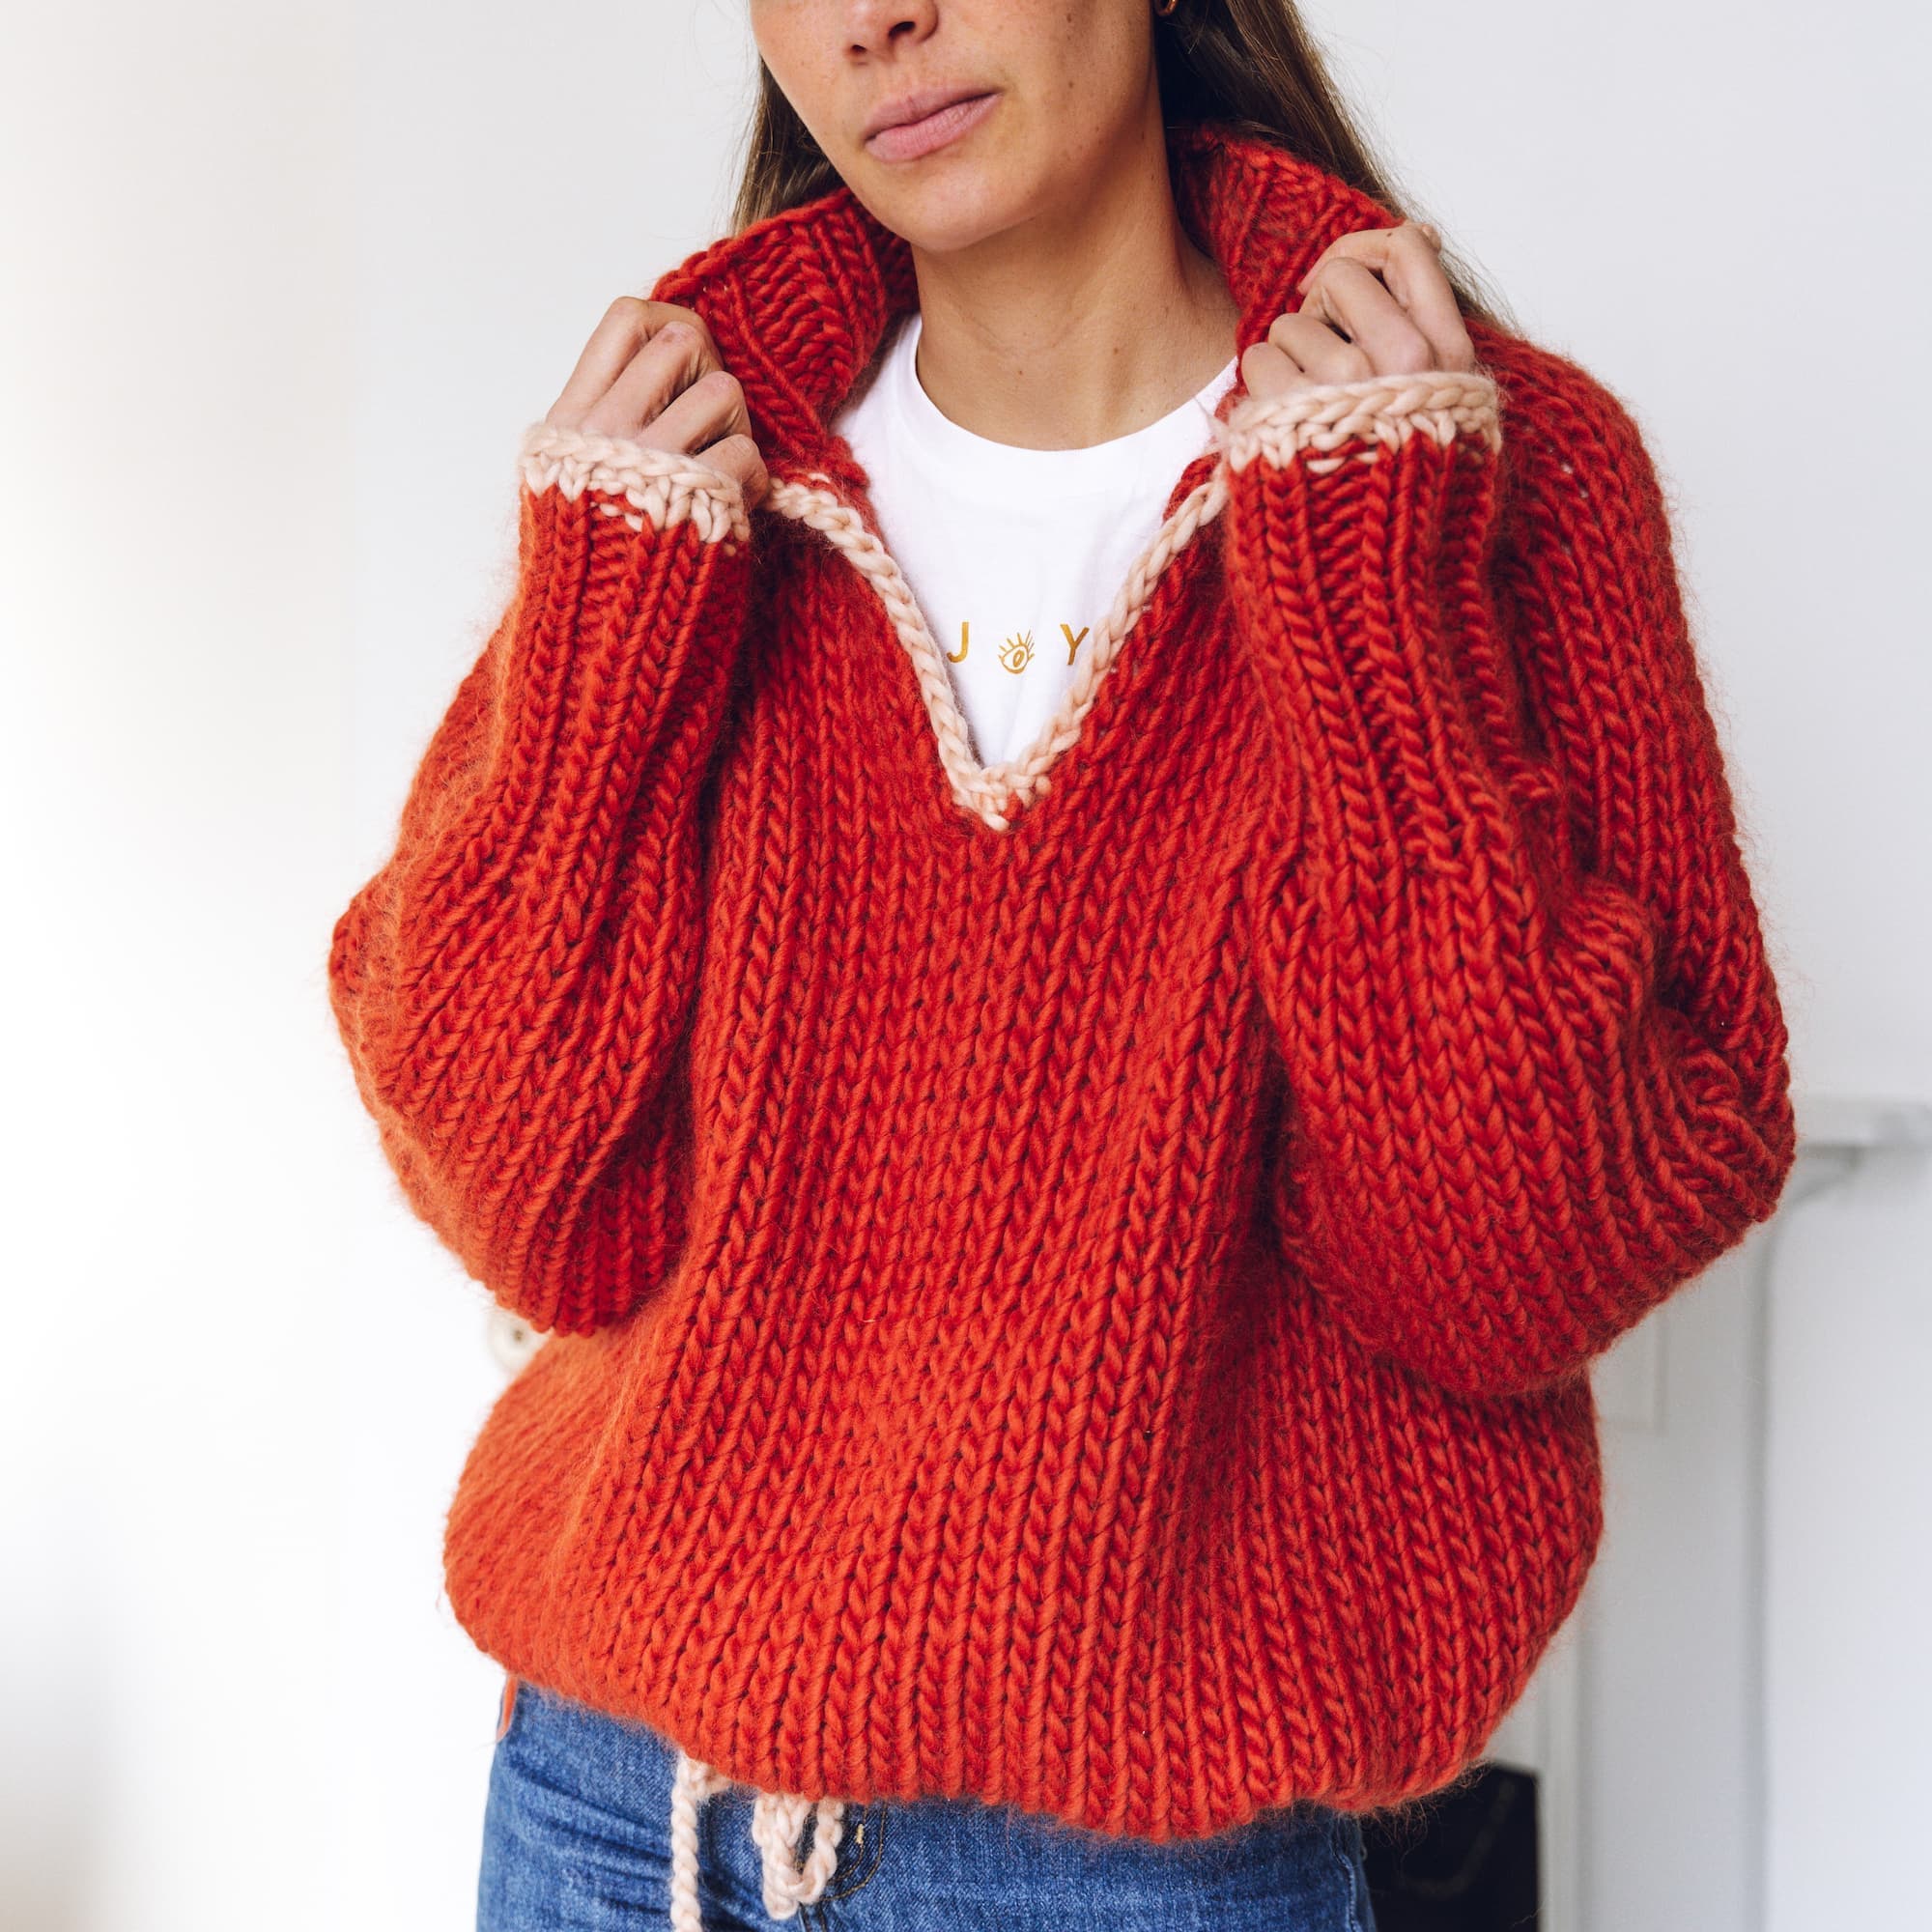 Knitting Kit - The Weekend Sweater - Lauren Aston Designs